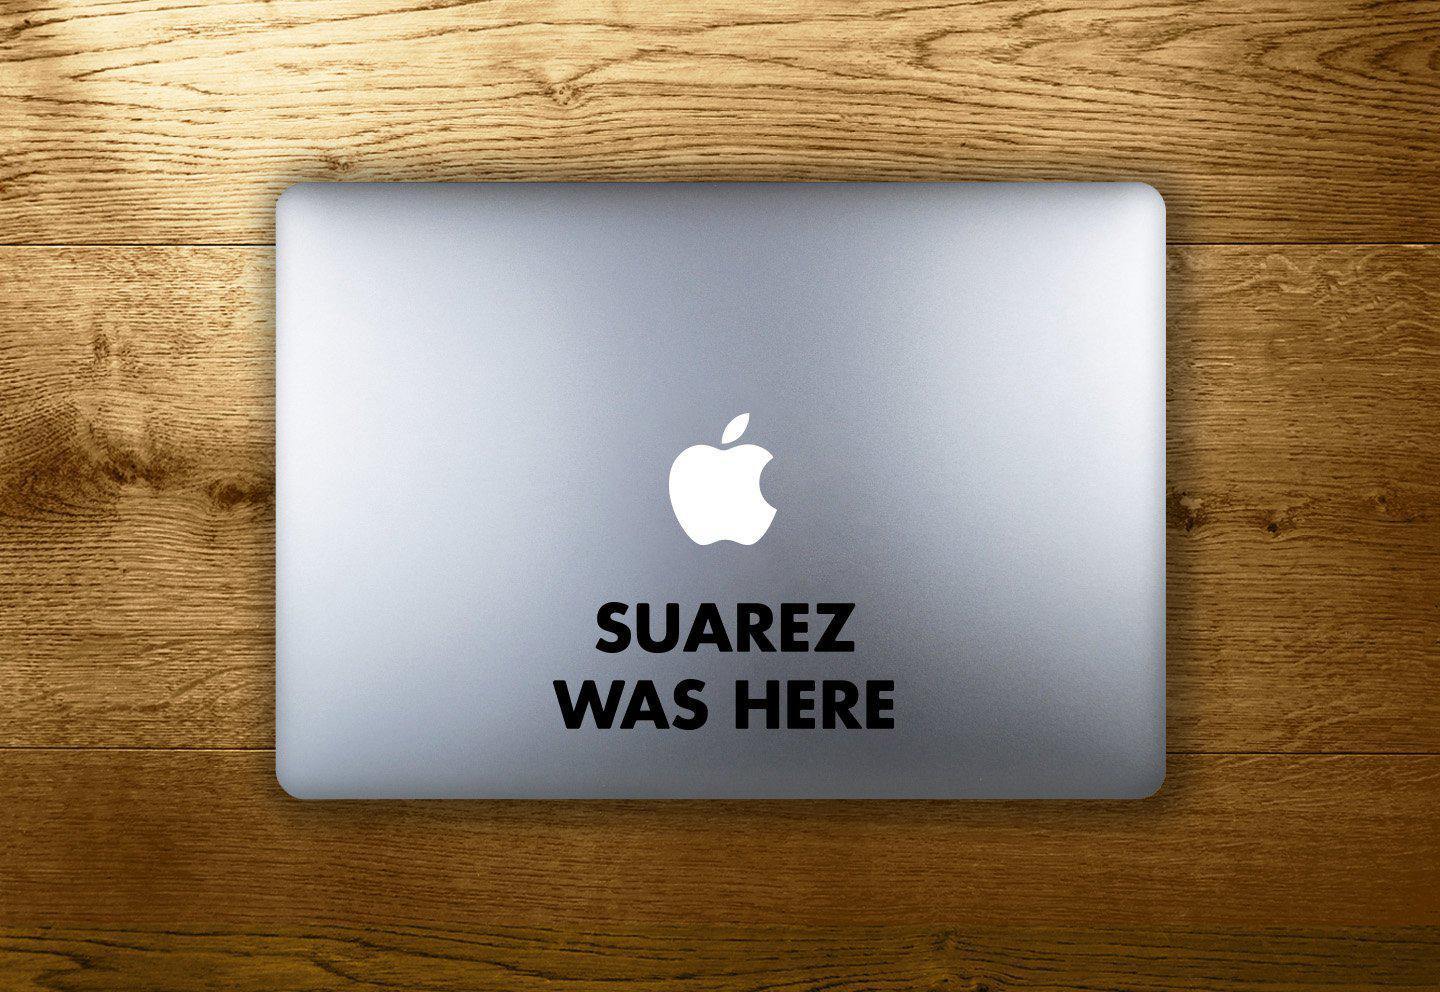 Suarez was here